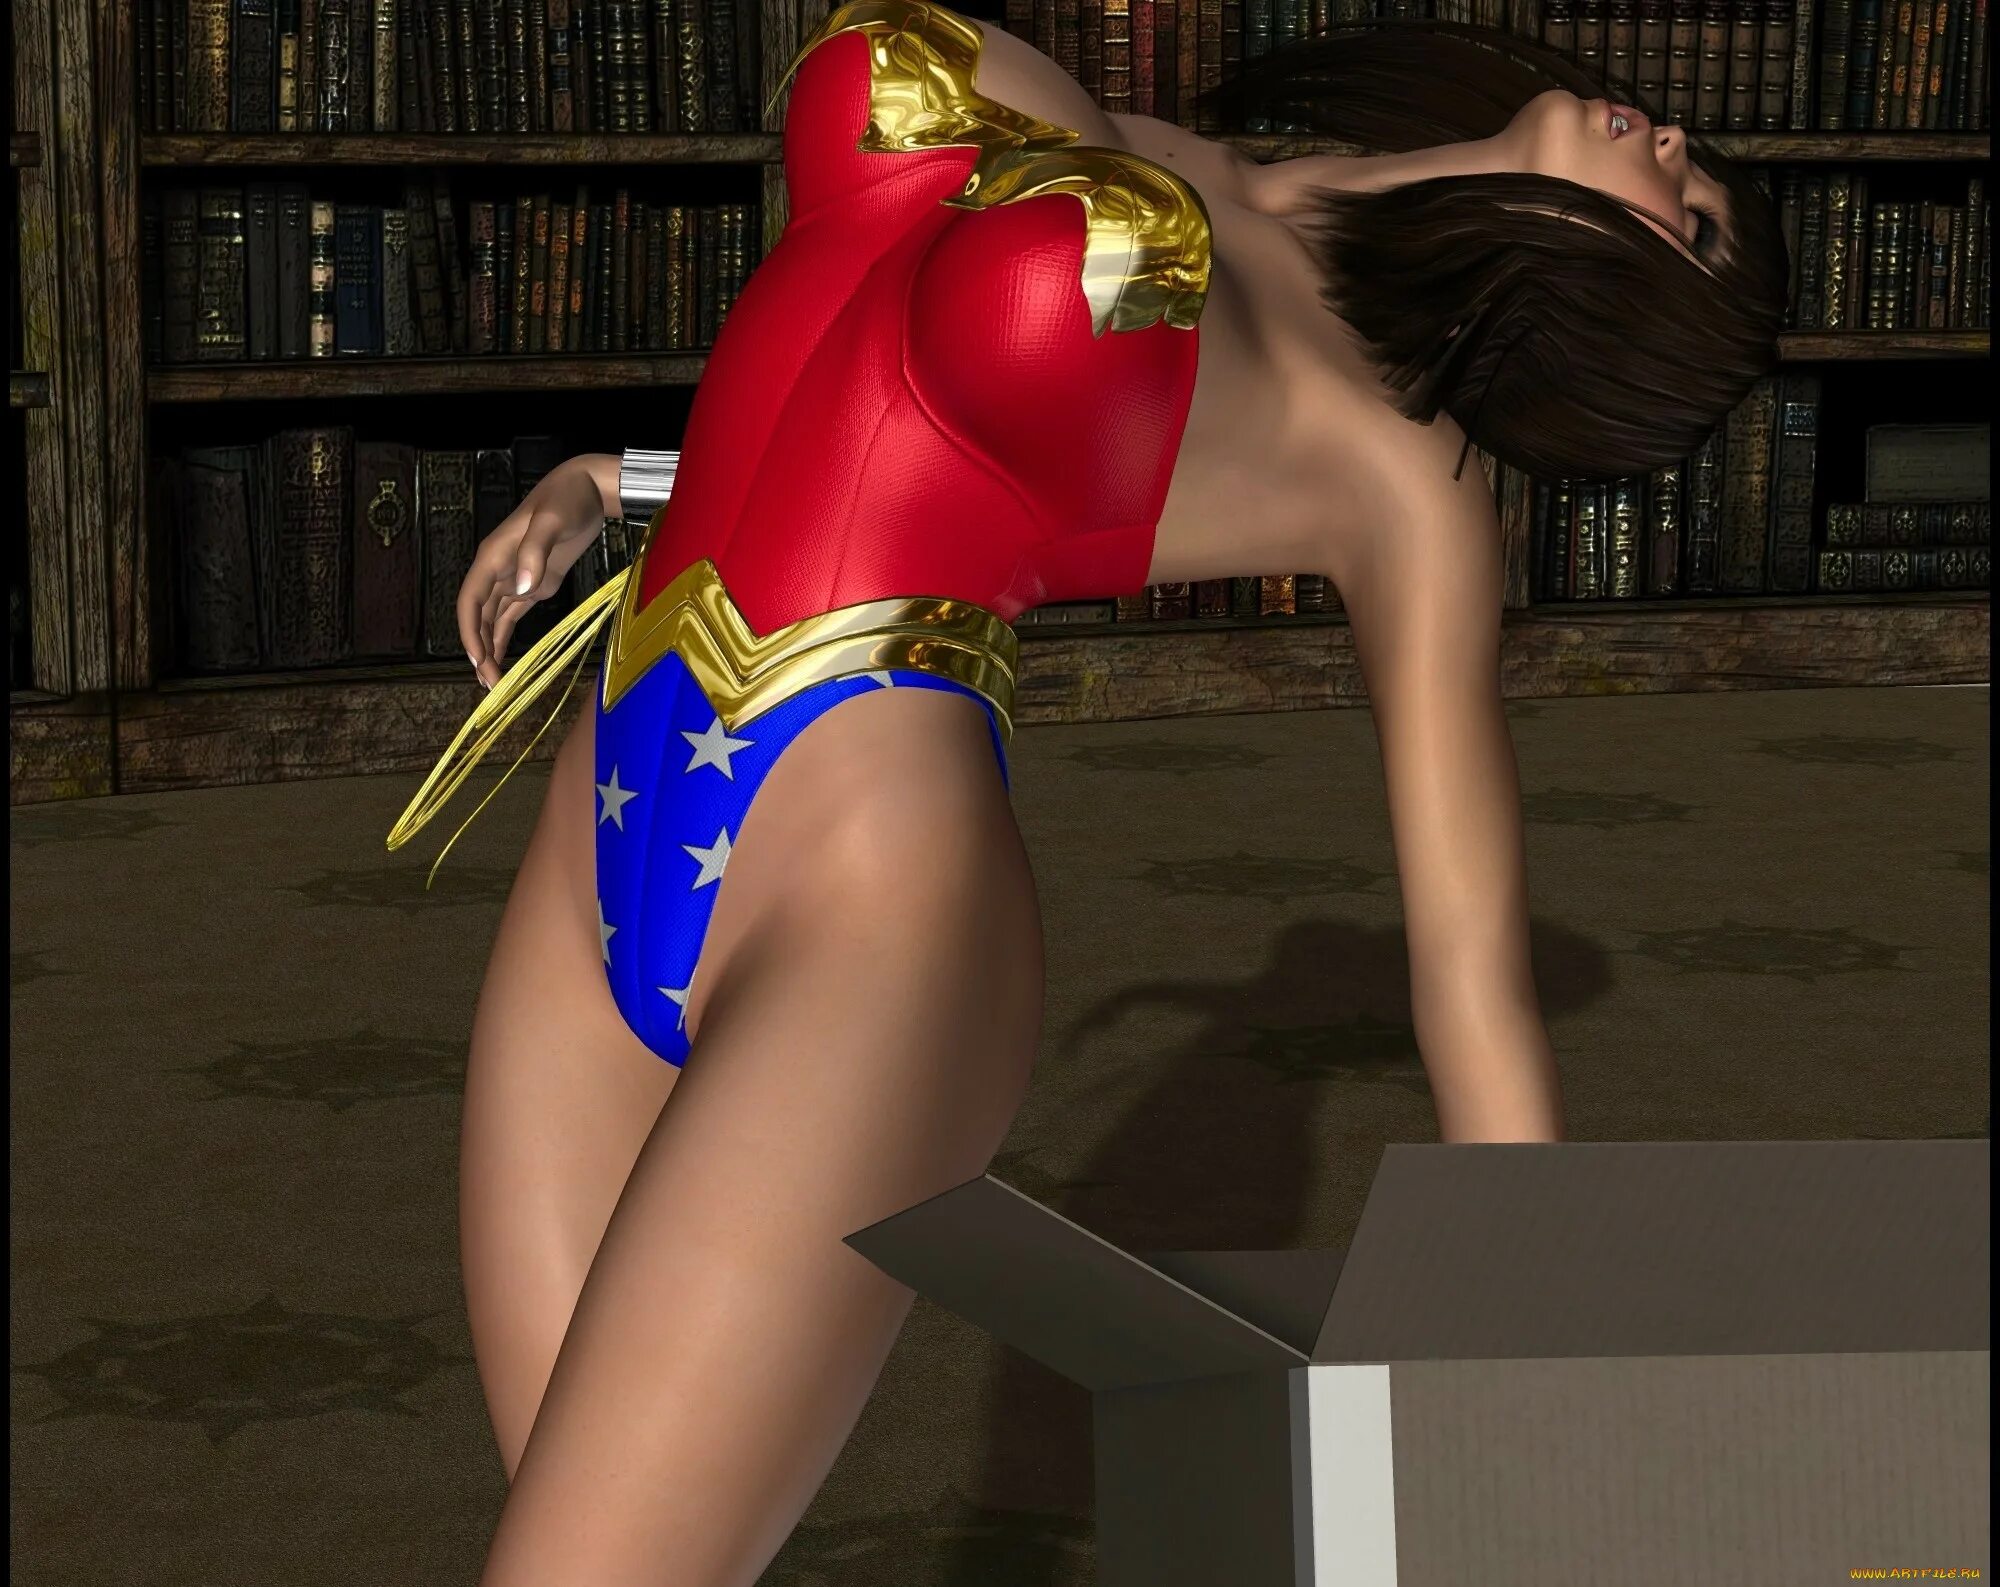 3d comics girl. Wonder woman in Peril 3. Артфайл 3д. Paula Peril. Бетгерл модель 3д.